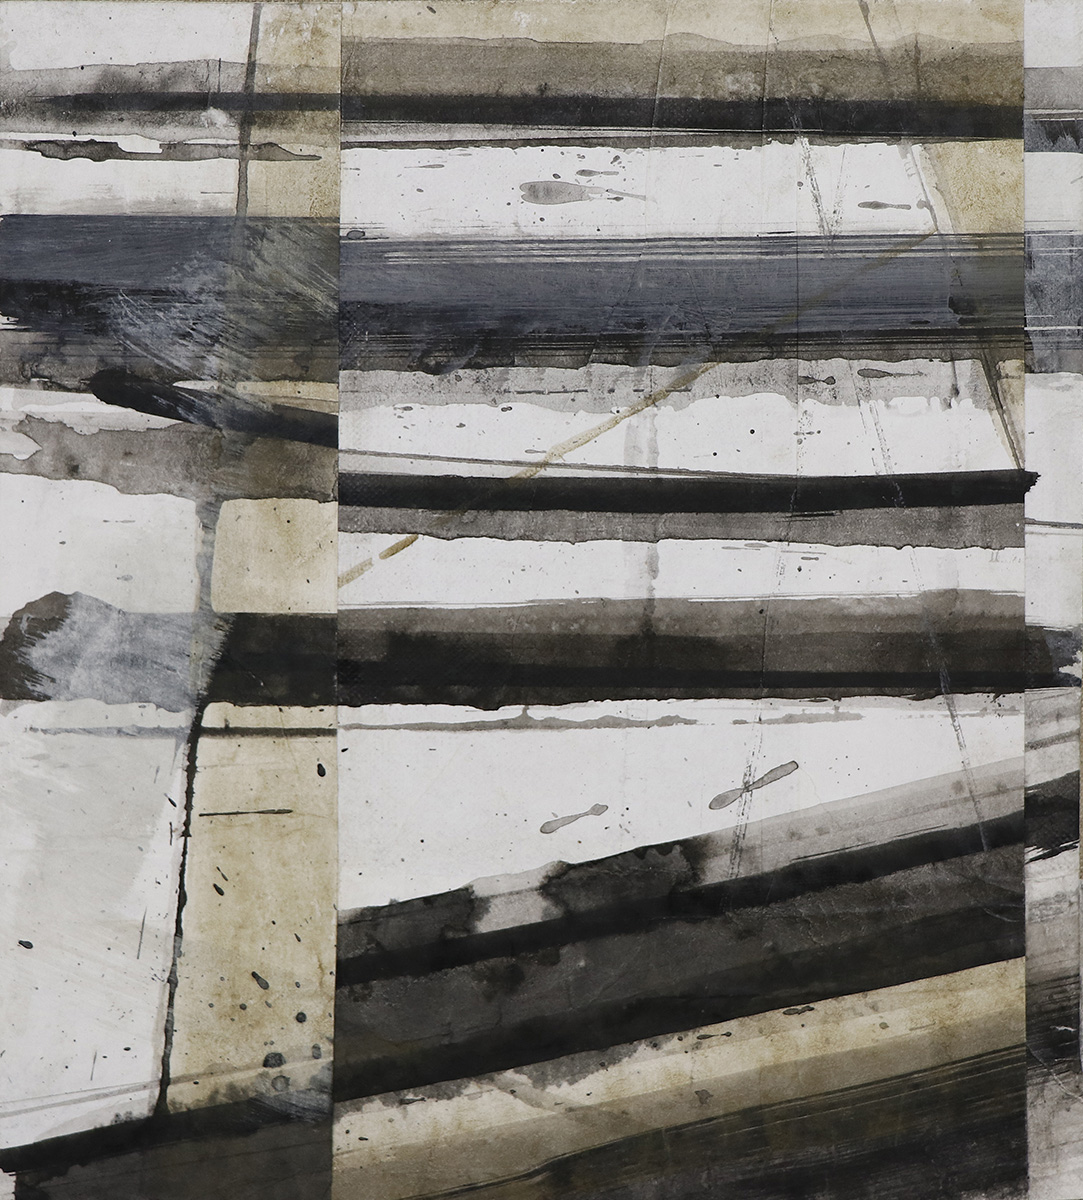 pleats#6, 202023 x 21 x 5 cmMixed media, paper on canvas, on wood